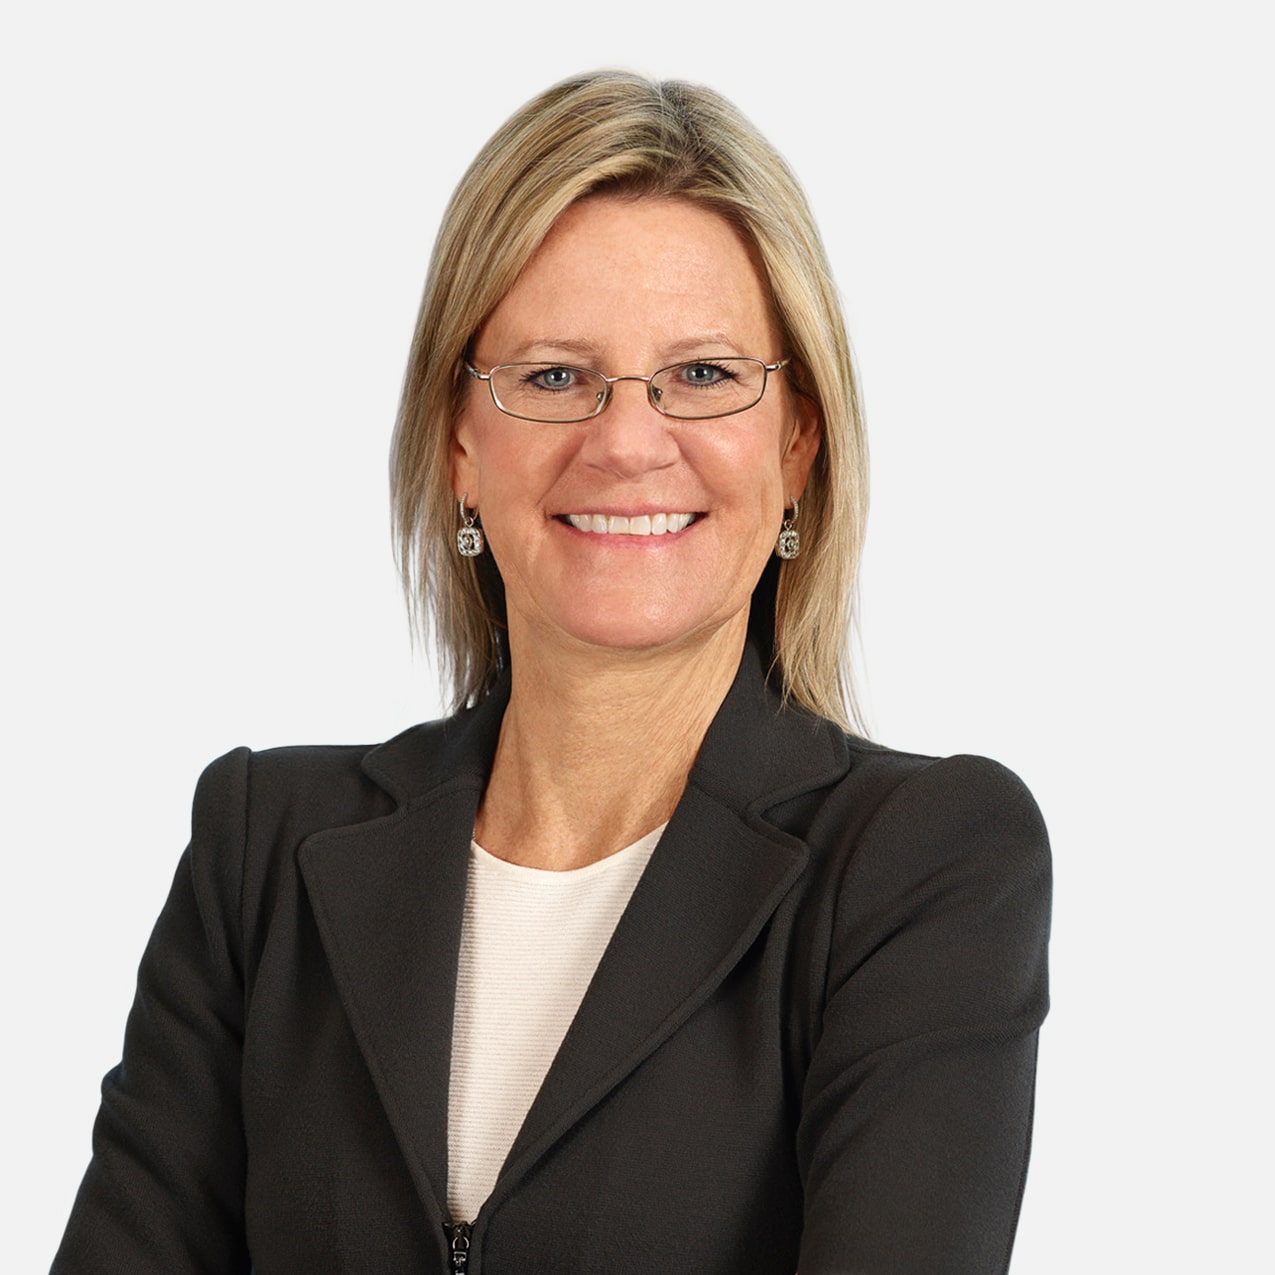 Kathy Valiasek - Chief Financial Officer